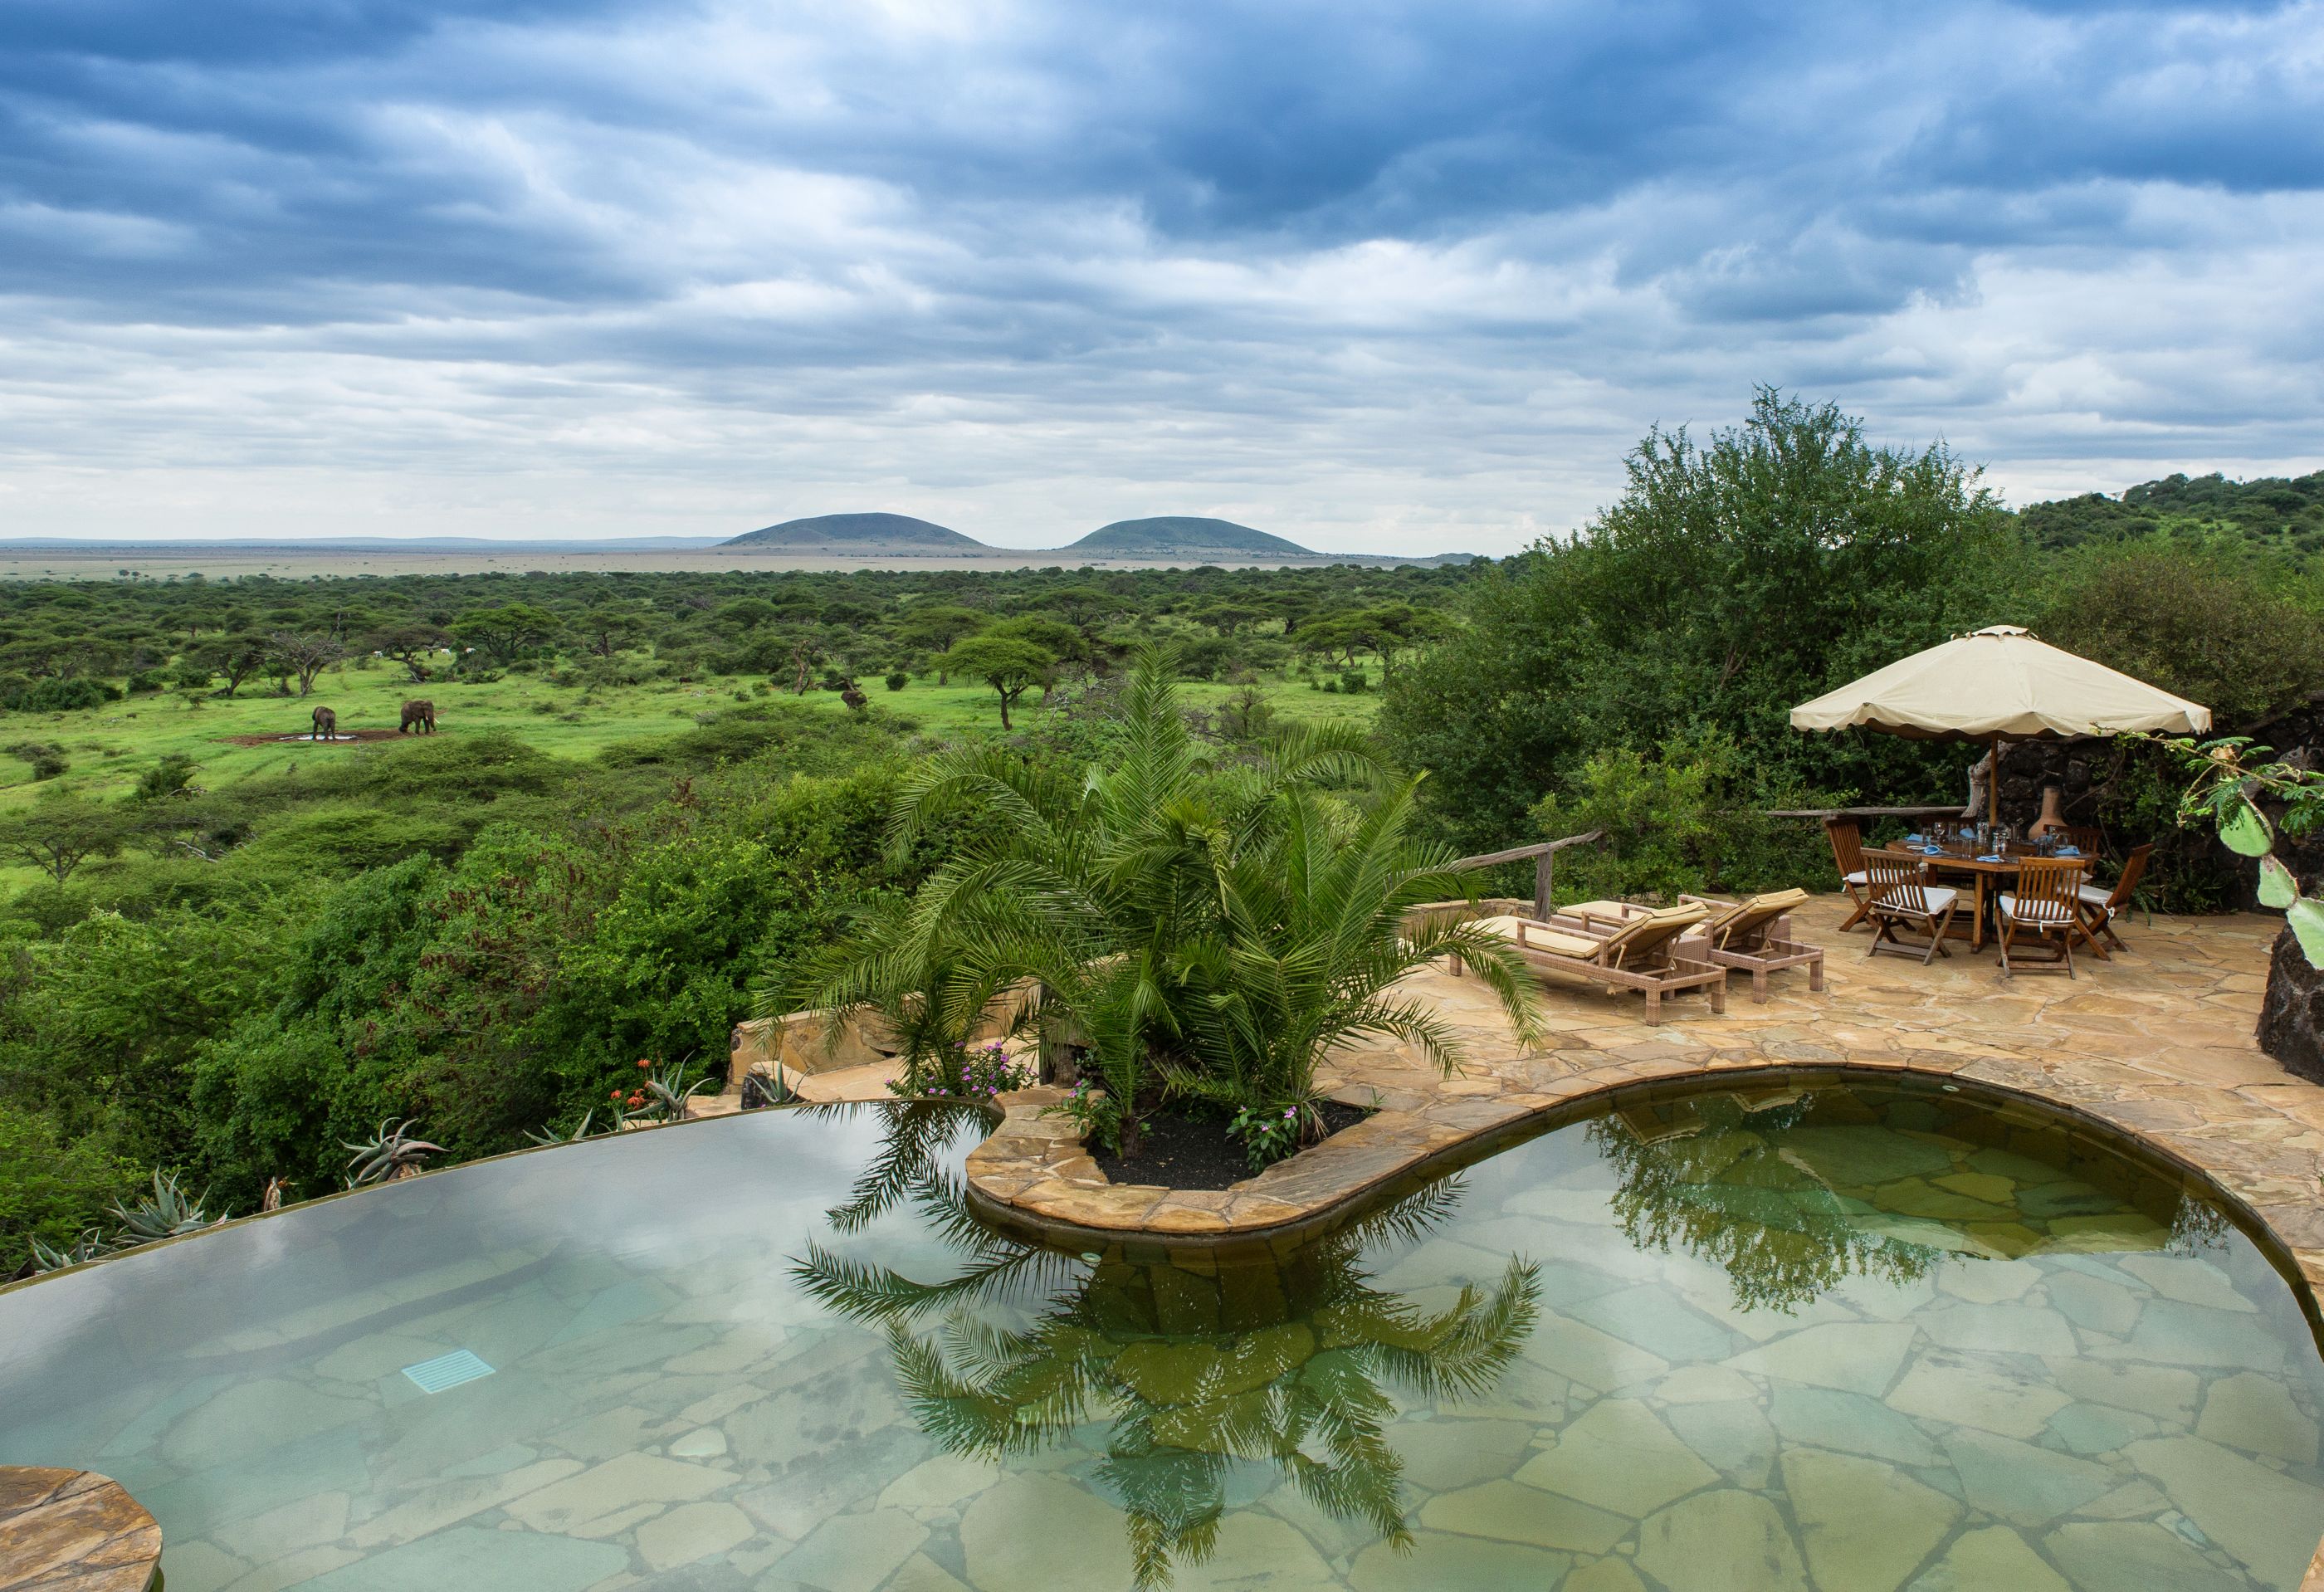 swimming pool at Ol Donyo Lodge, Kenya